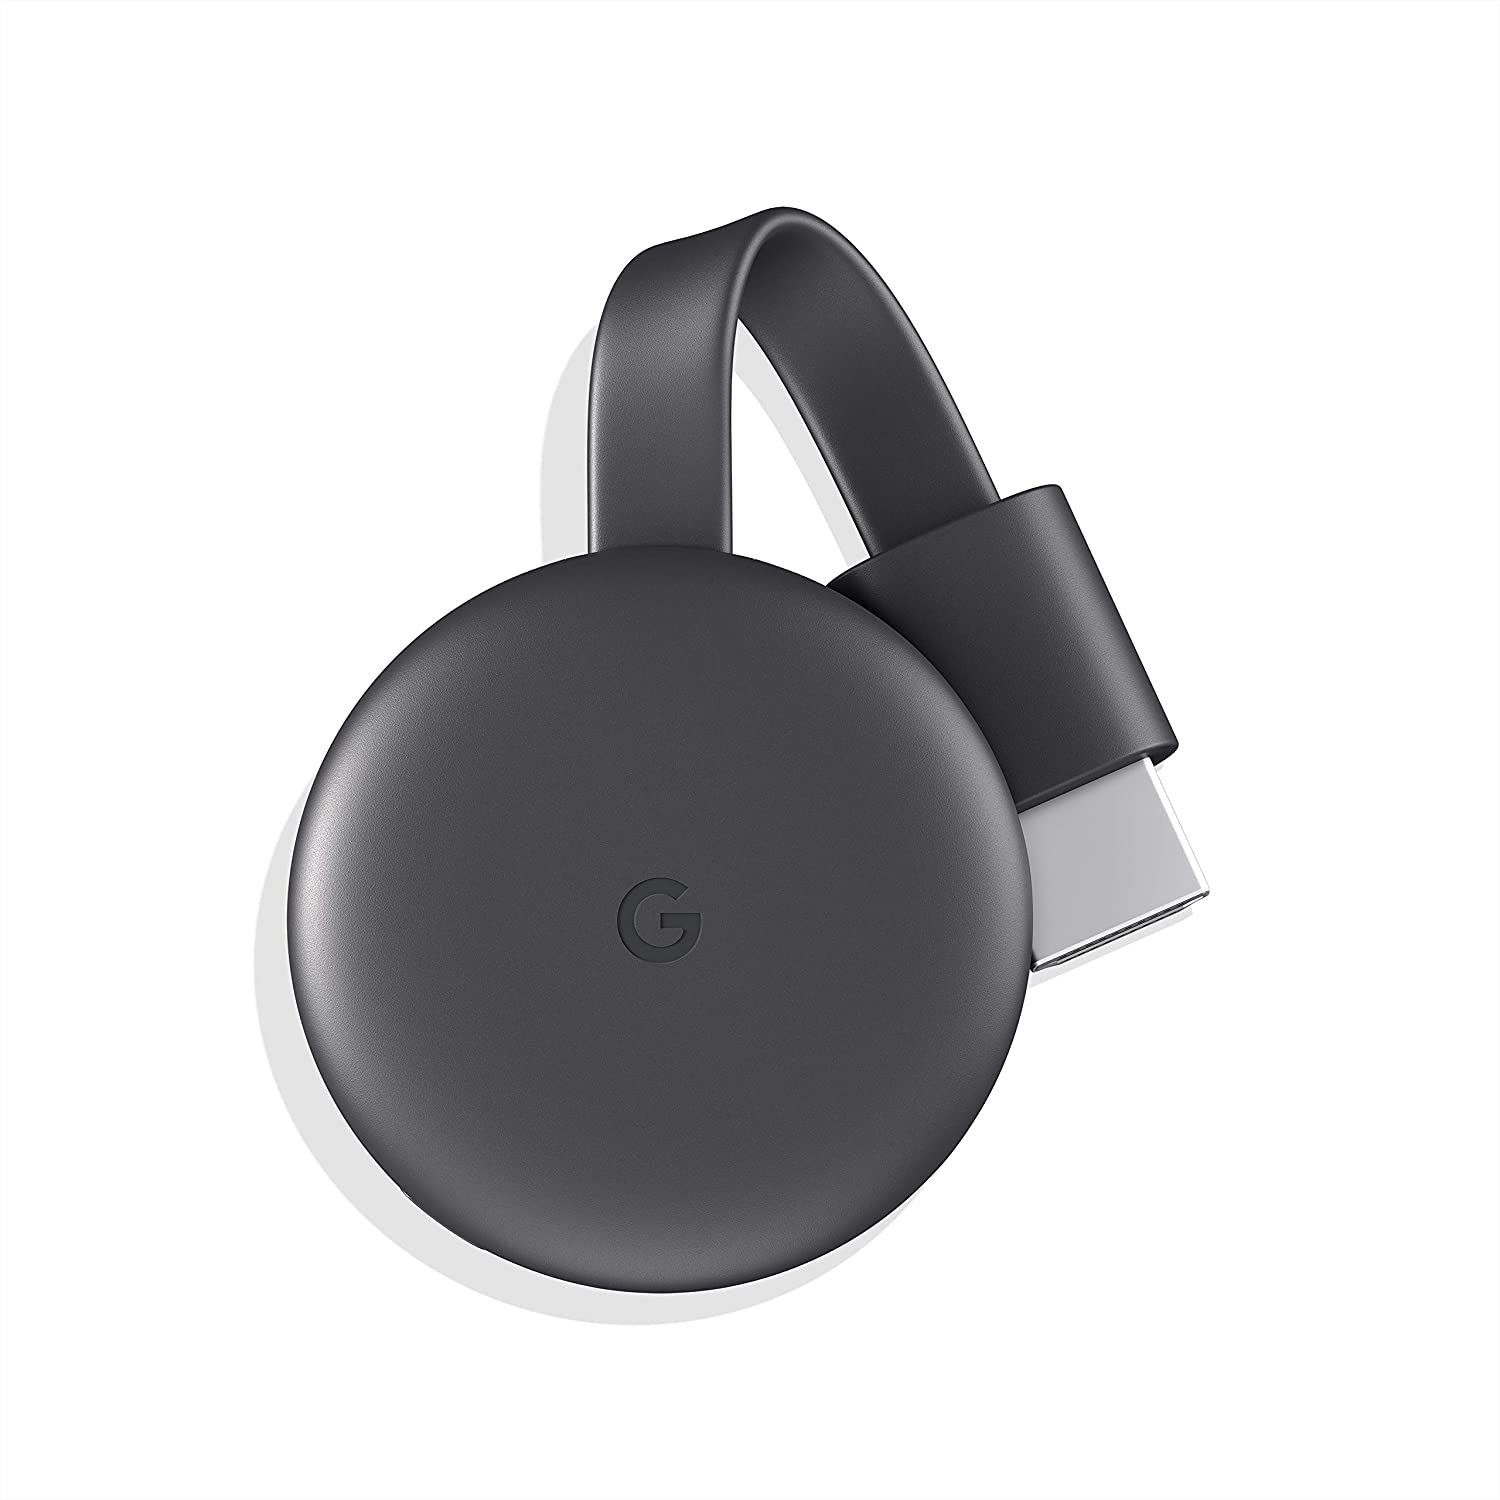 grab google chromecast 3rd generation for just $19